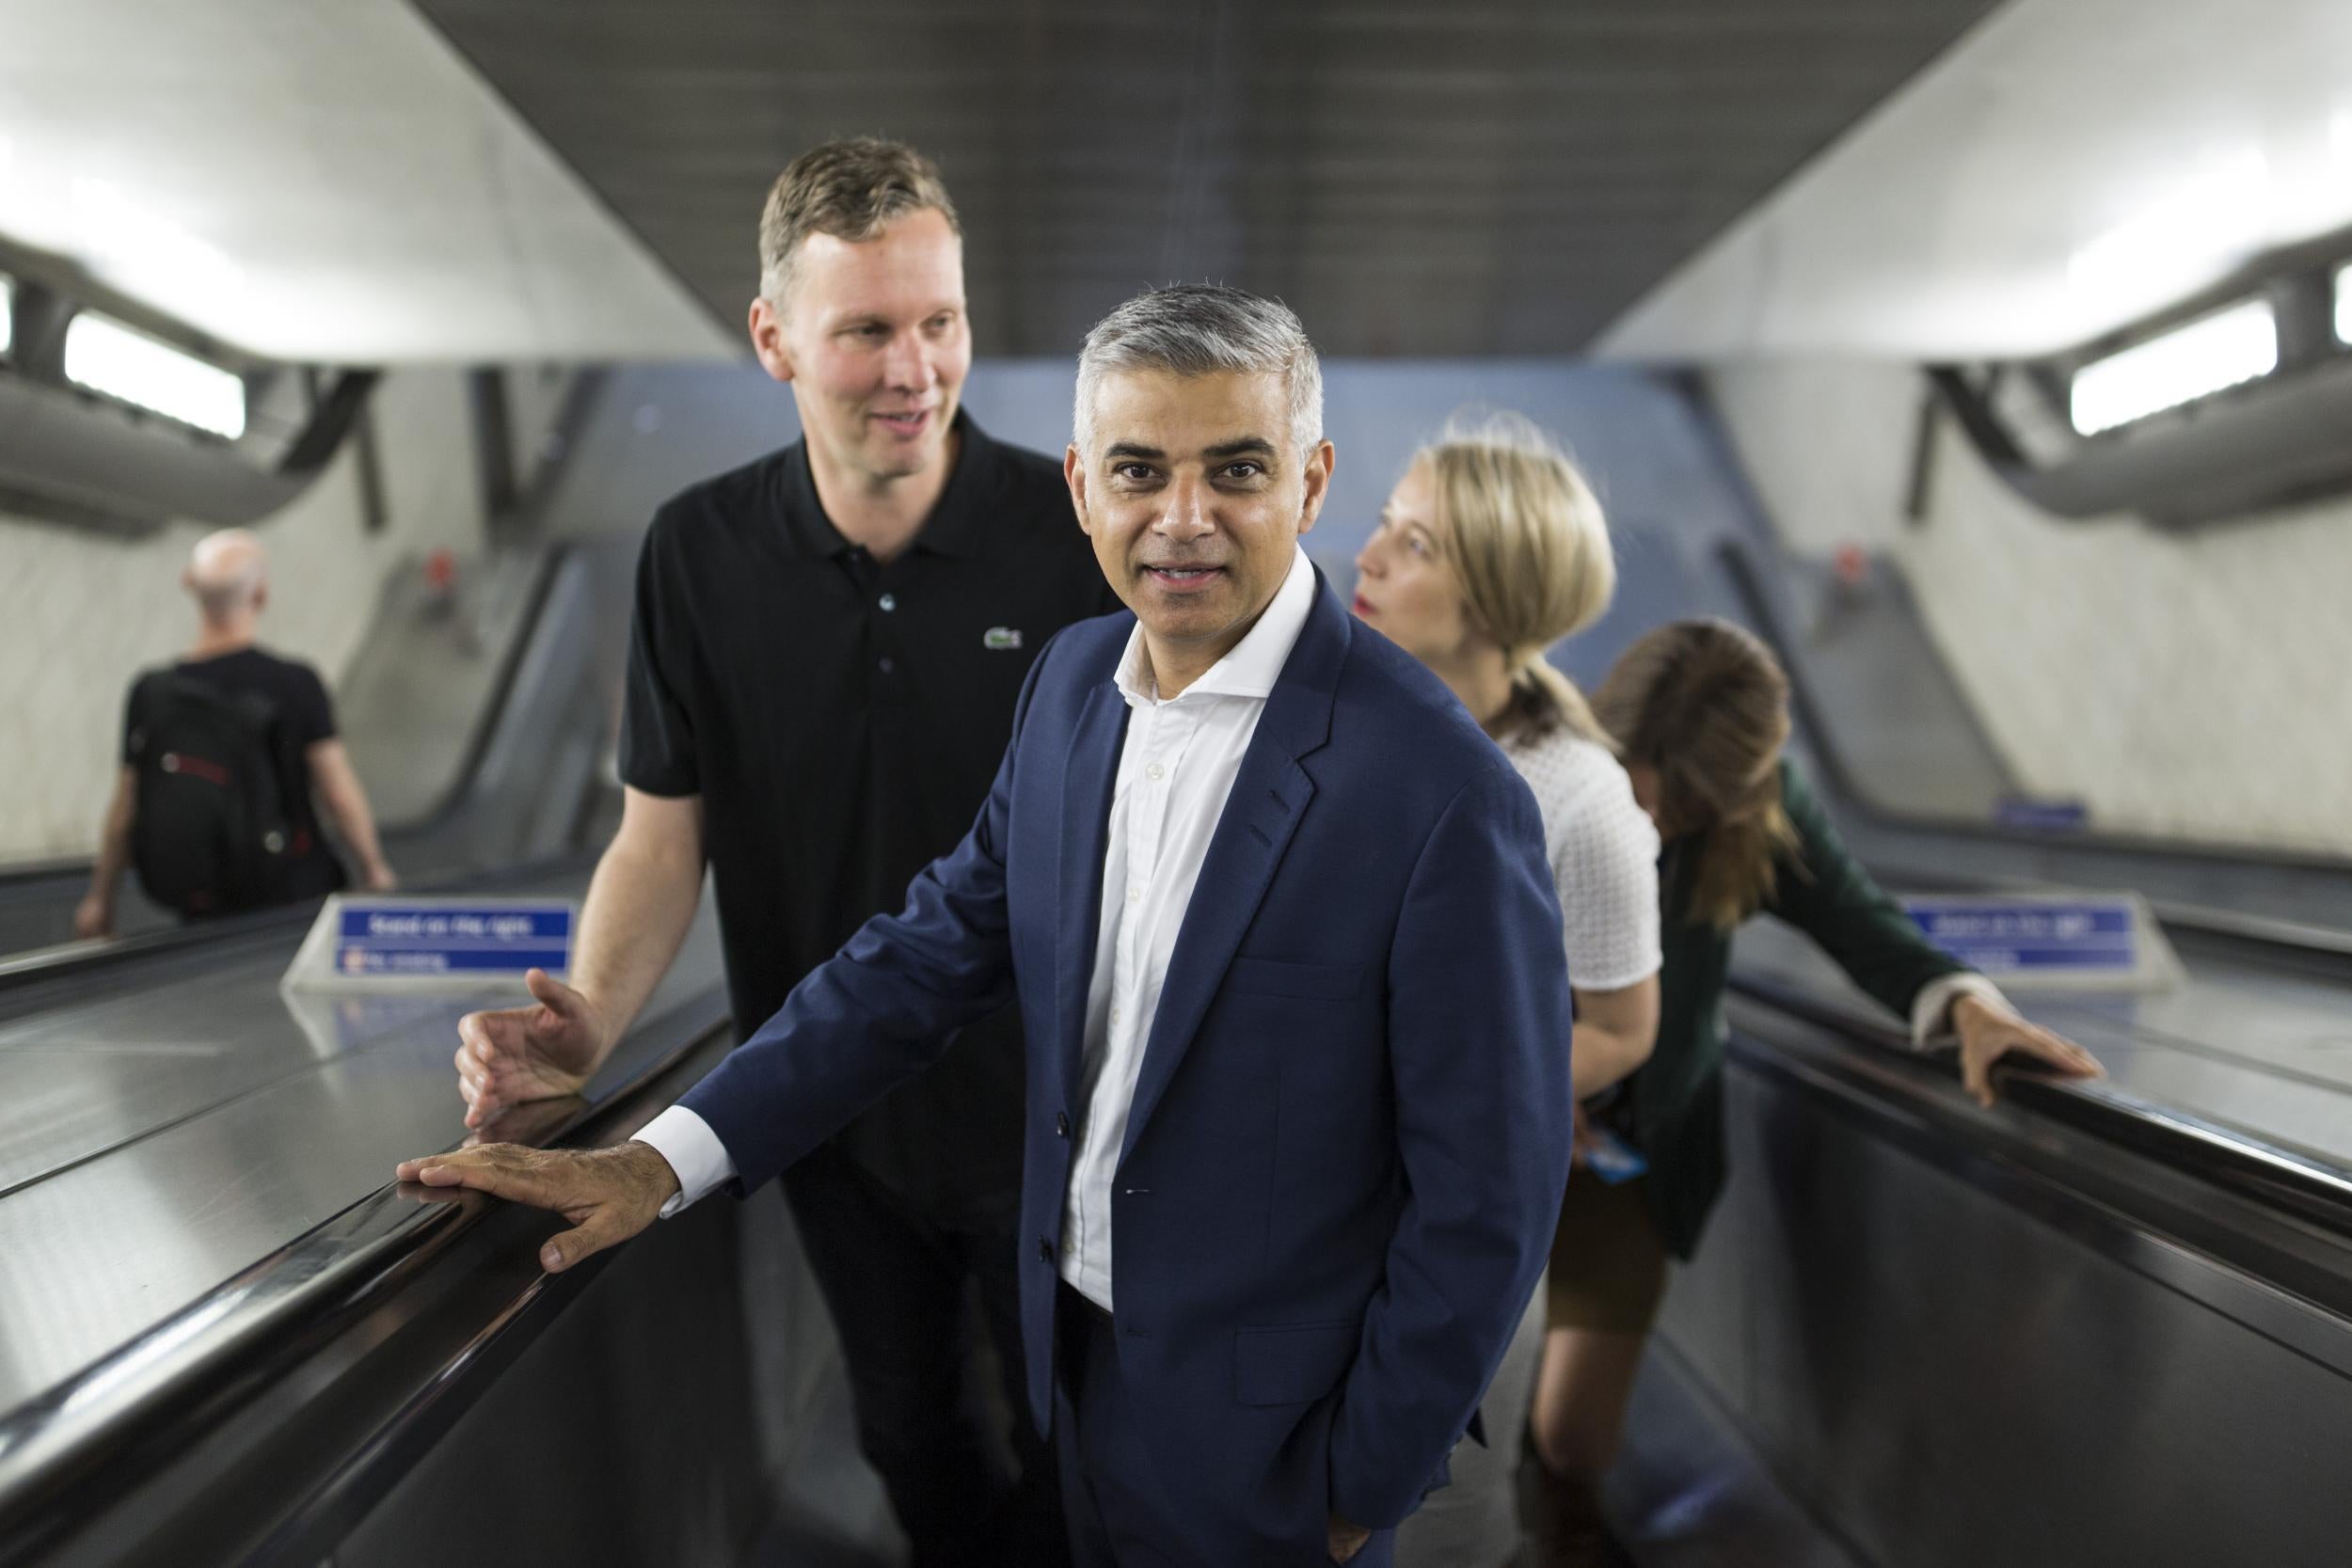 London mayor Sadiq Khan, having a good stand on the right of an escalator.